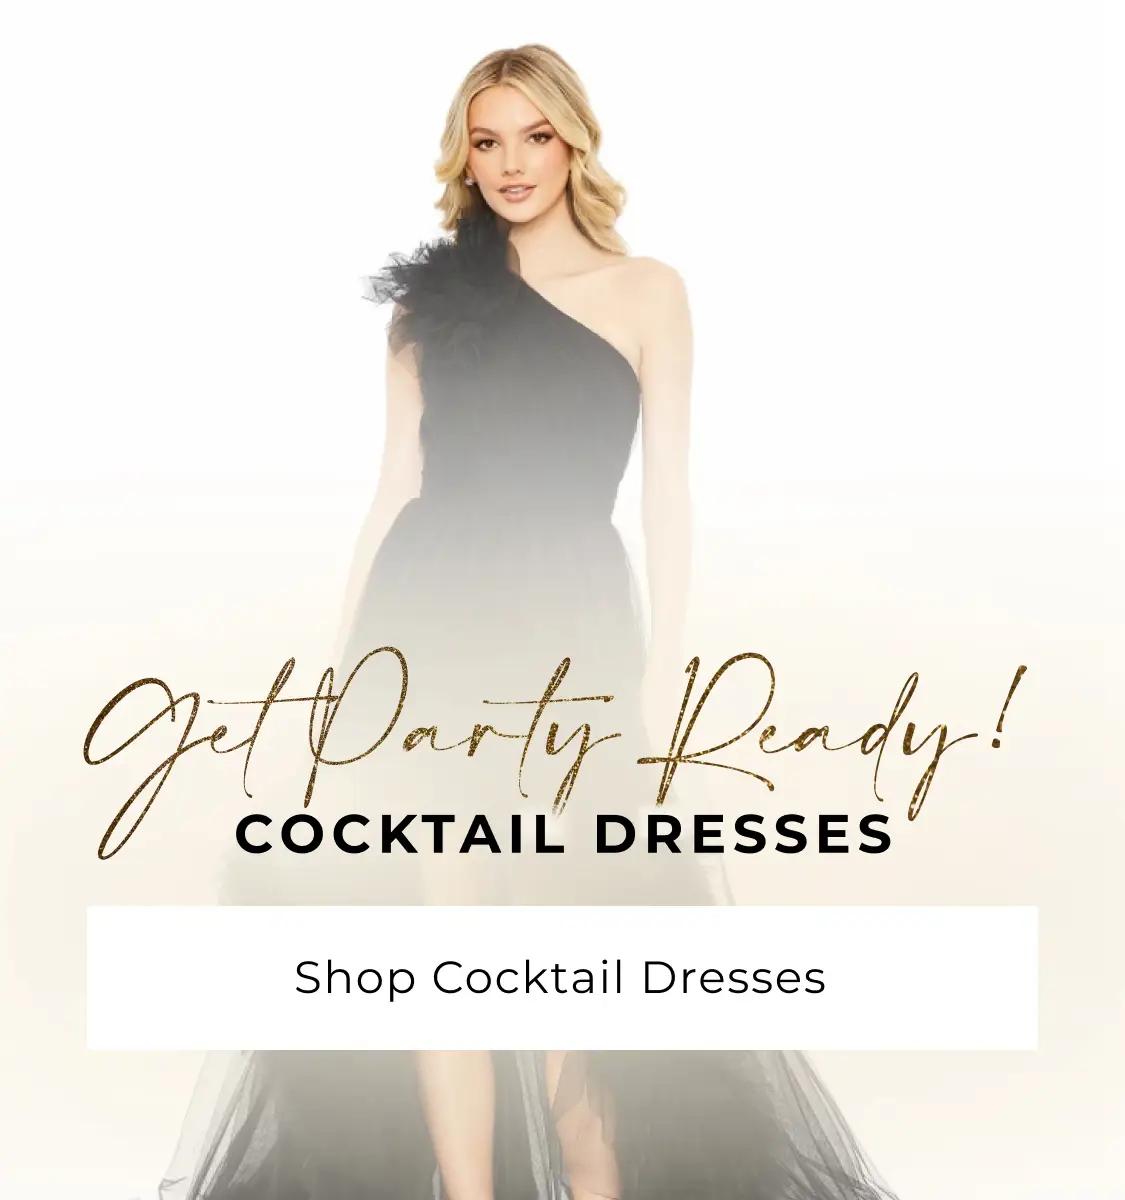 Mobile Cocktail Dresses Banner